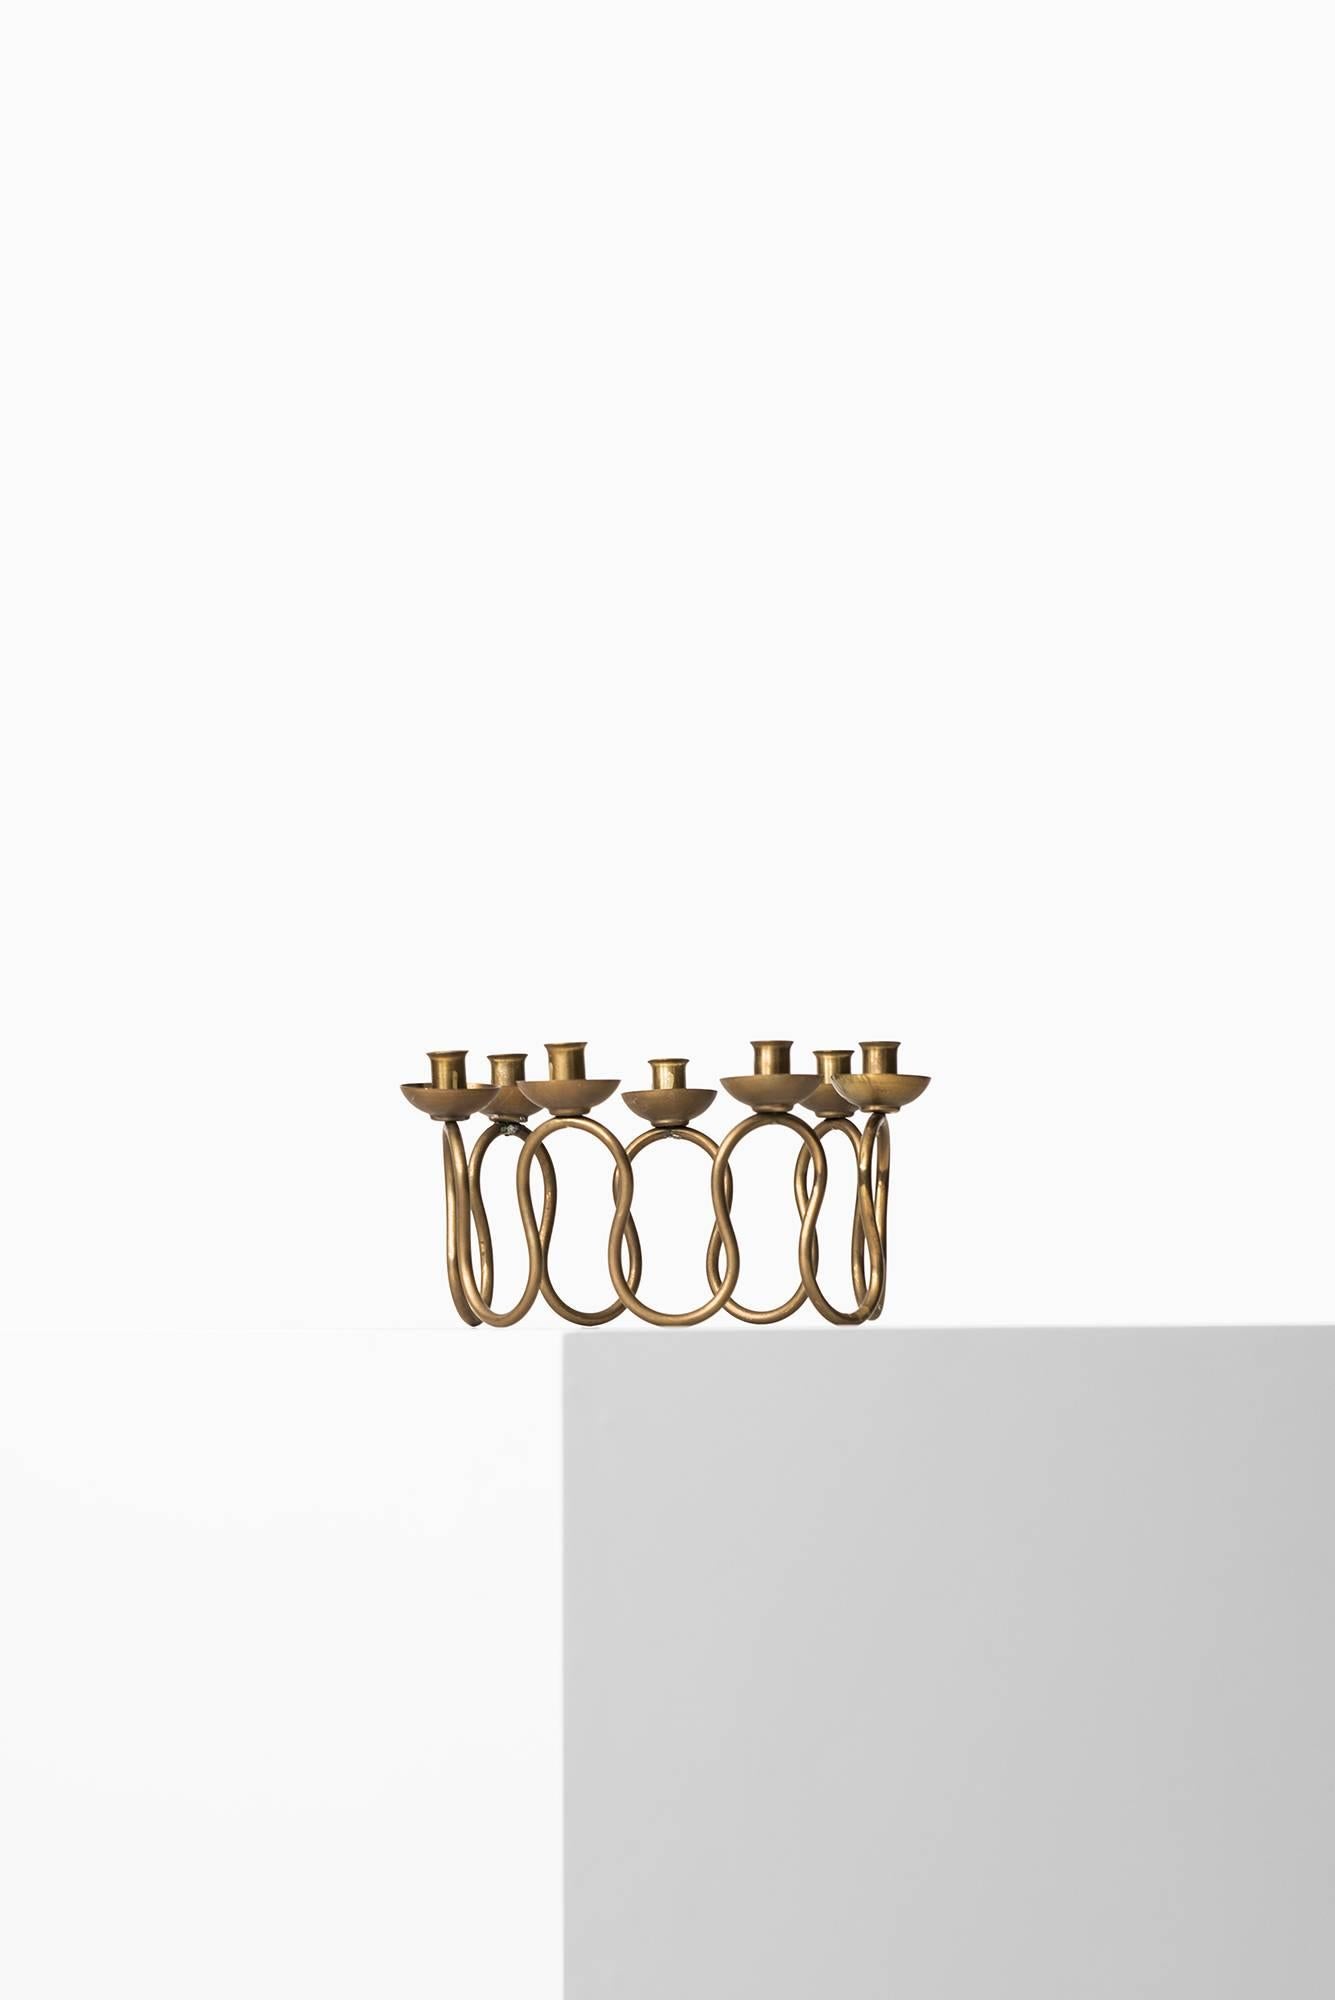 Brass candlestick designed by Lars Holmström. Produced by Lars Holmström in Arvika, Sweden.